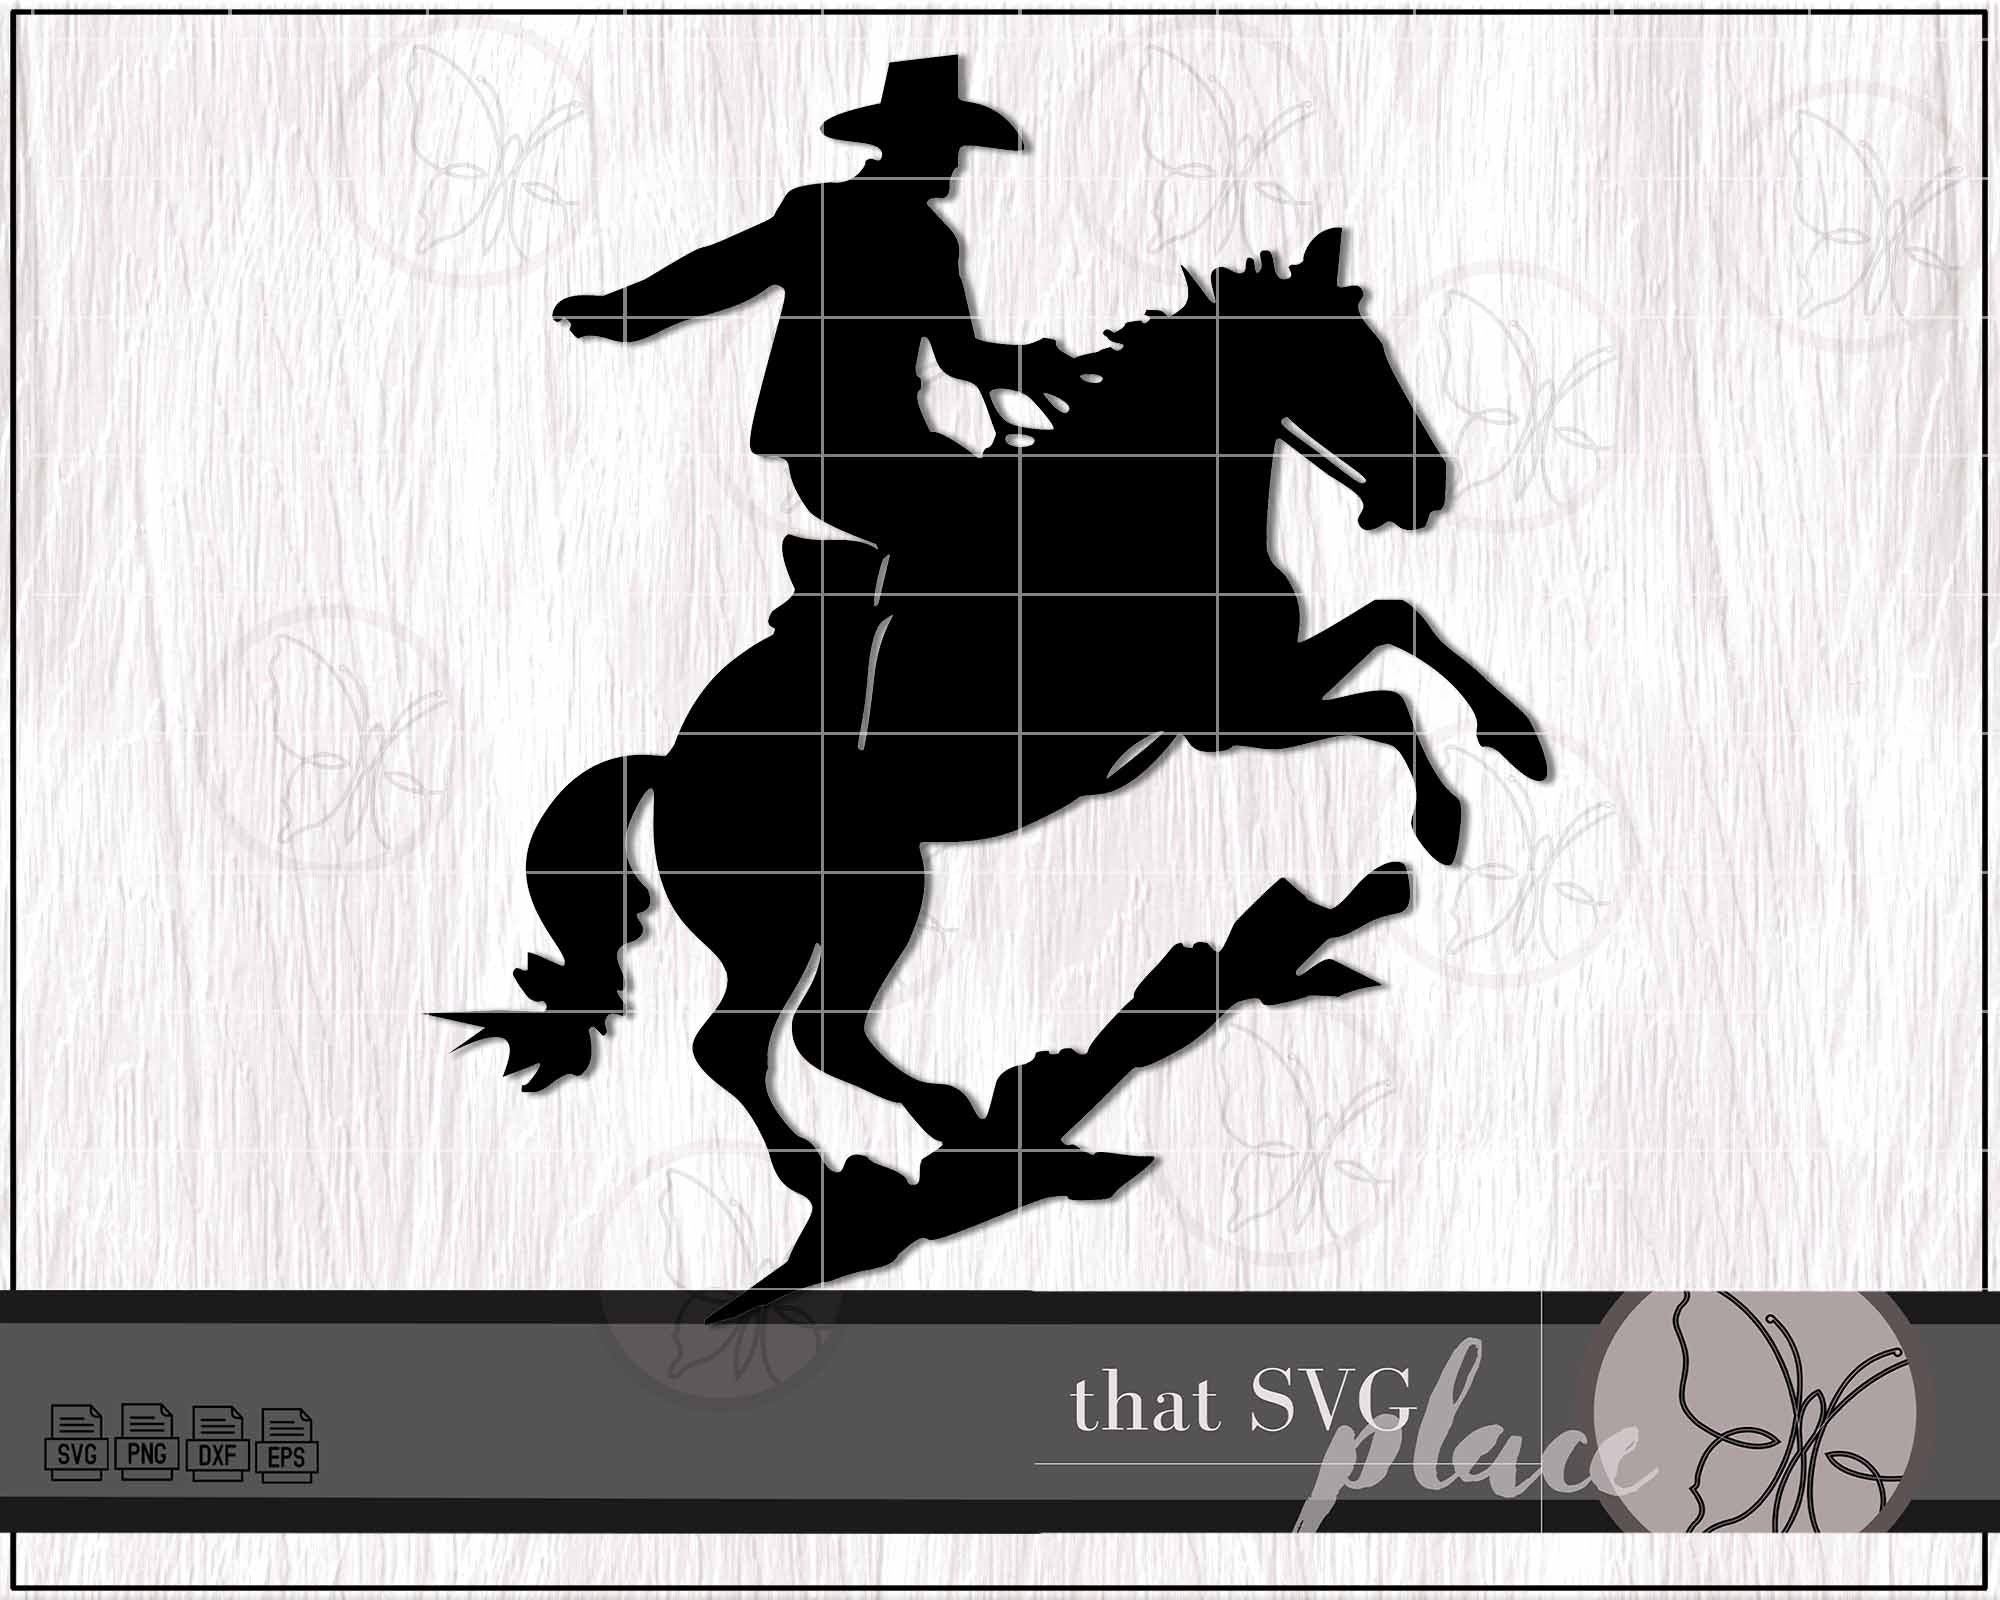 Cowboy Riding a Bronco Rodeo Editorial Stock Photo - Image of horse, riding:  67677563